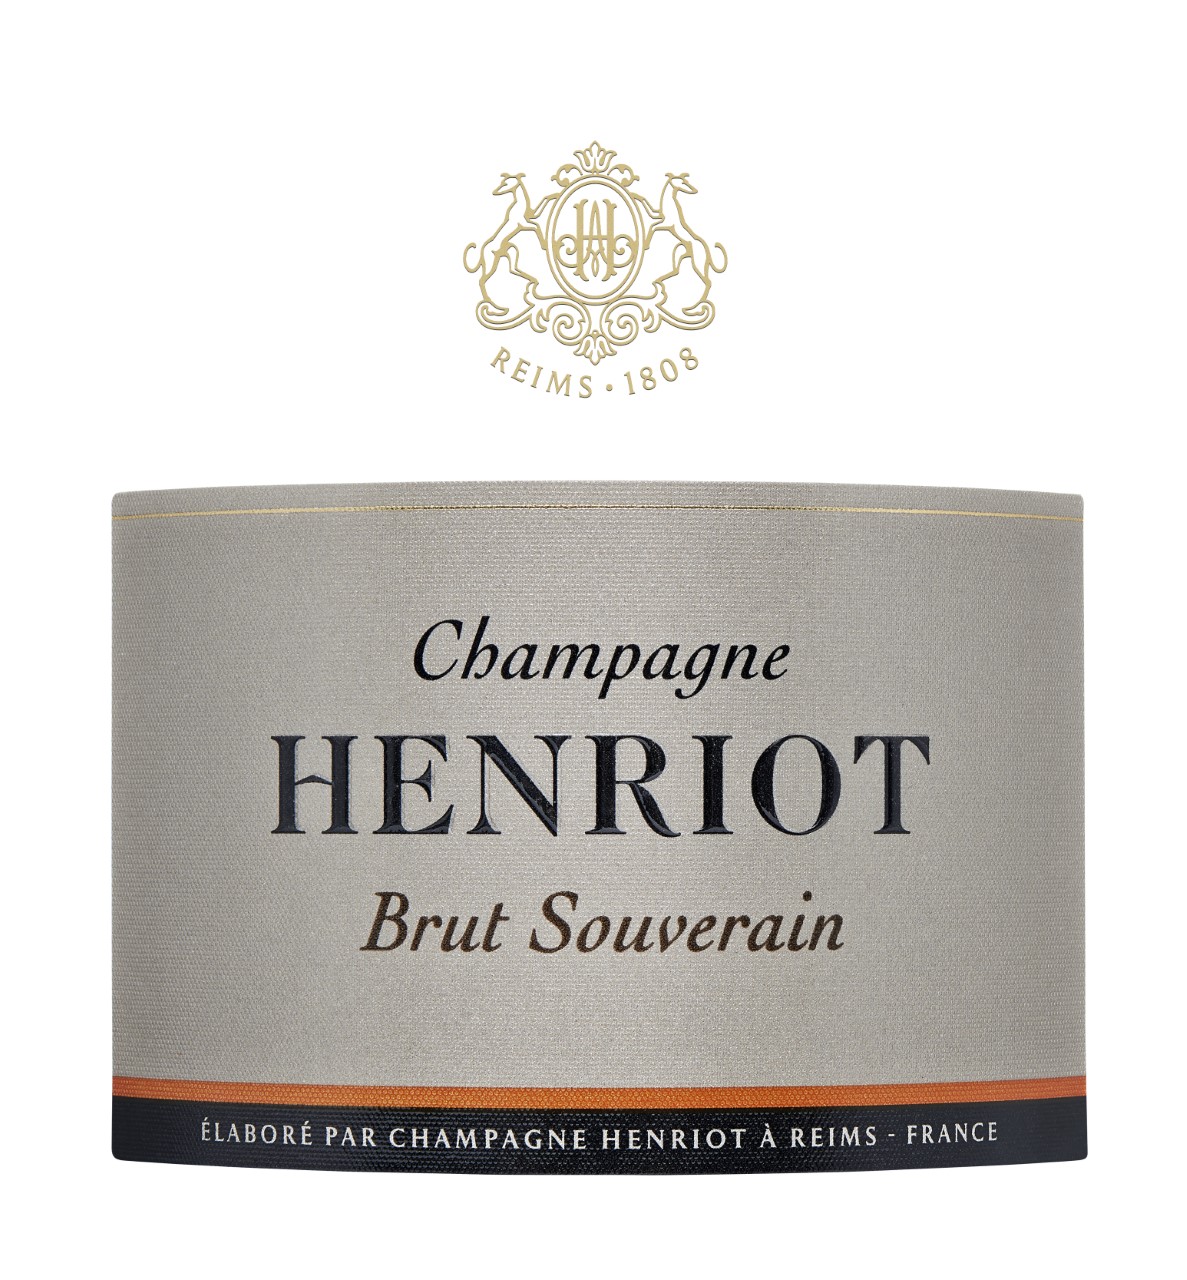 NV Henriot Souverain Brut Champagne - click image for full description